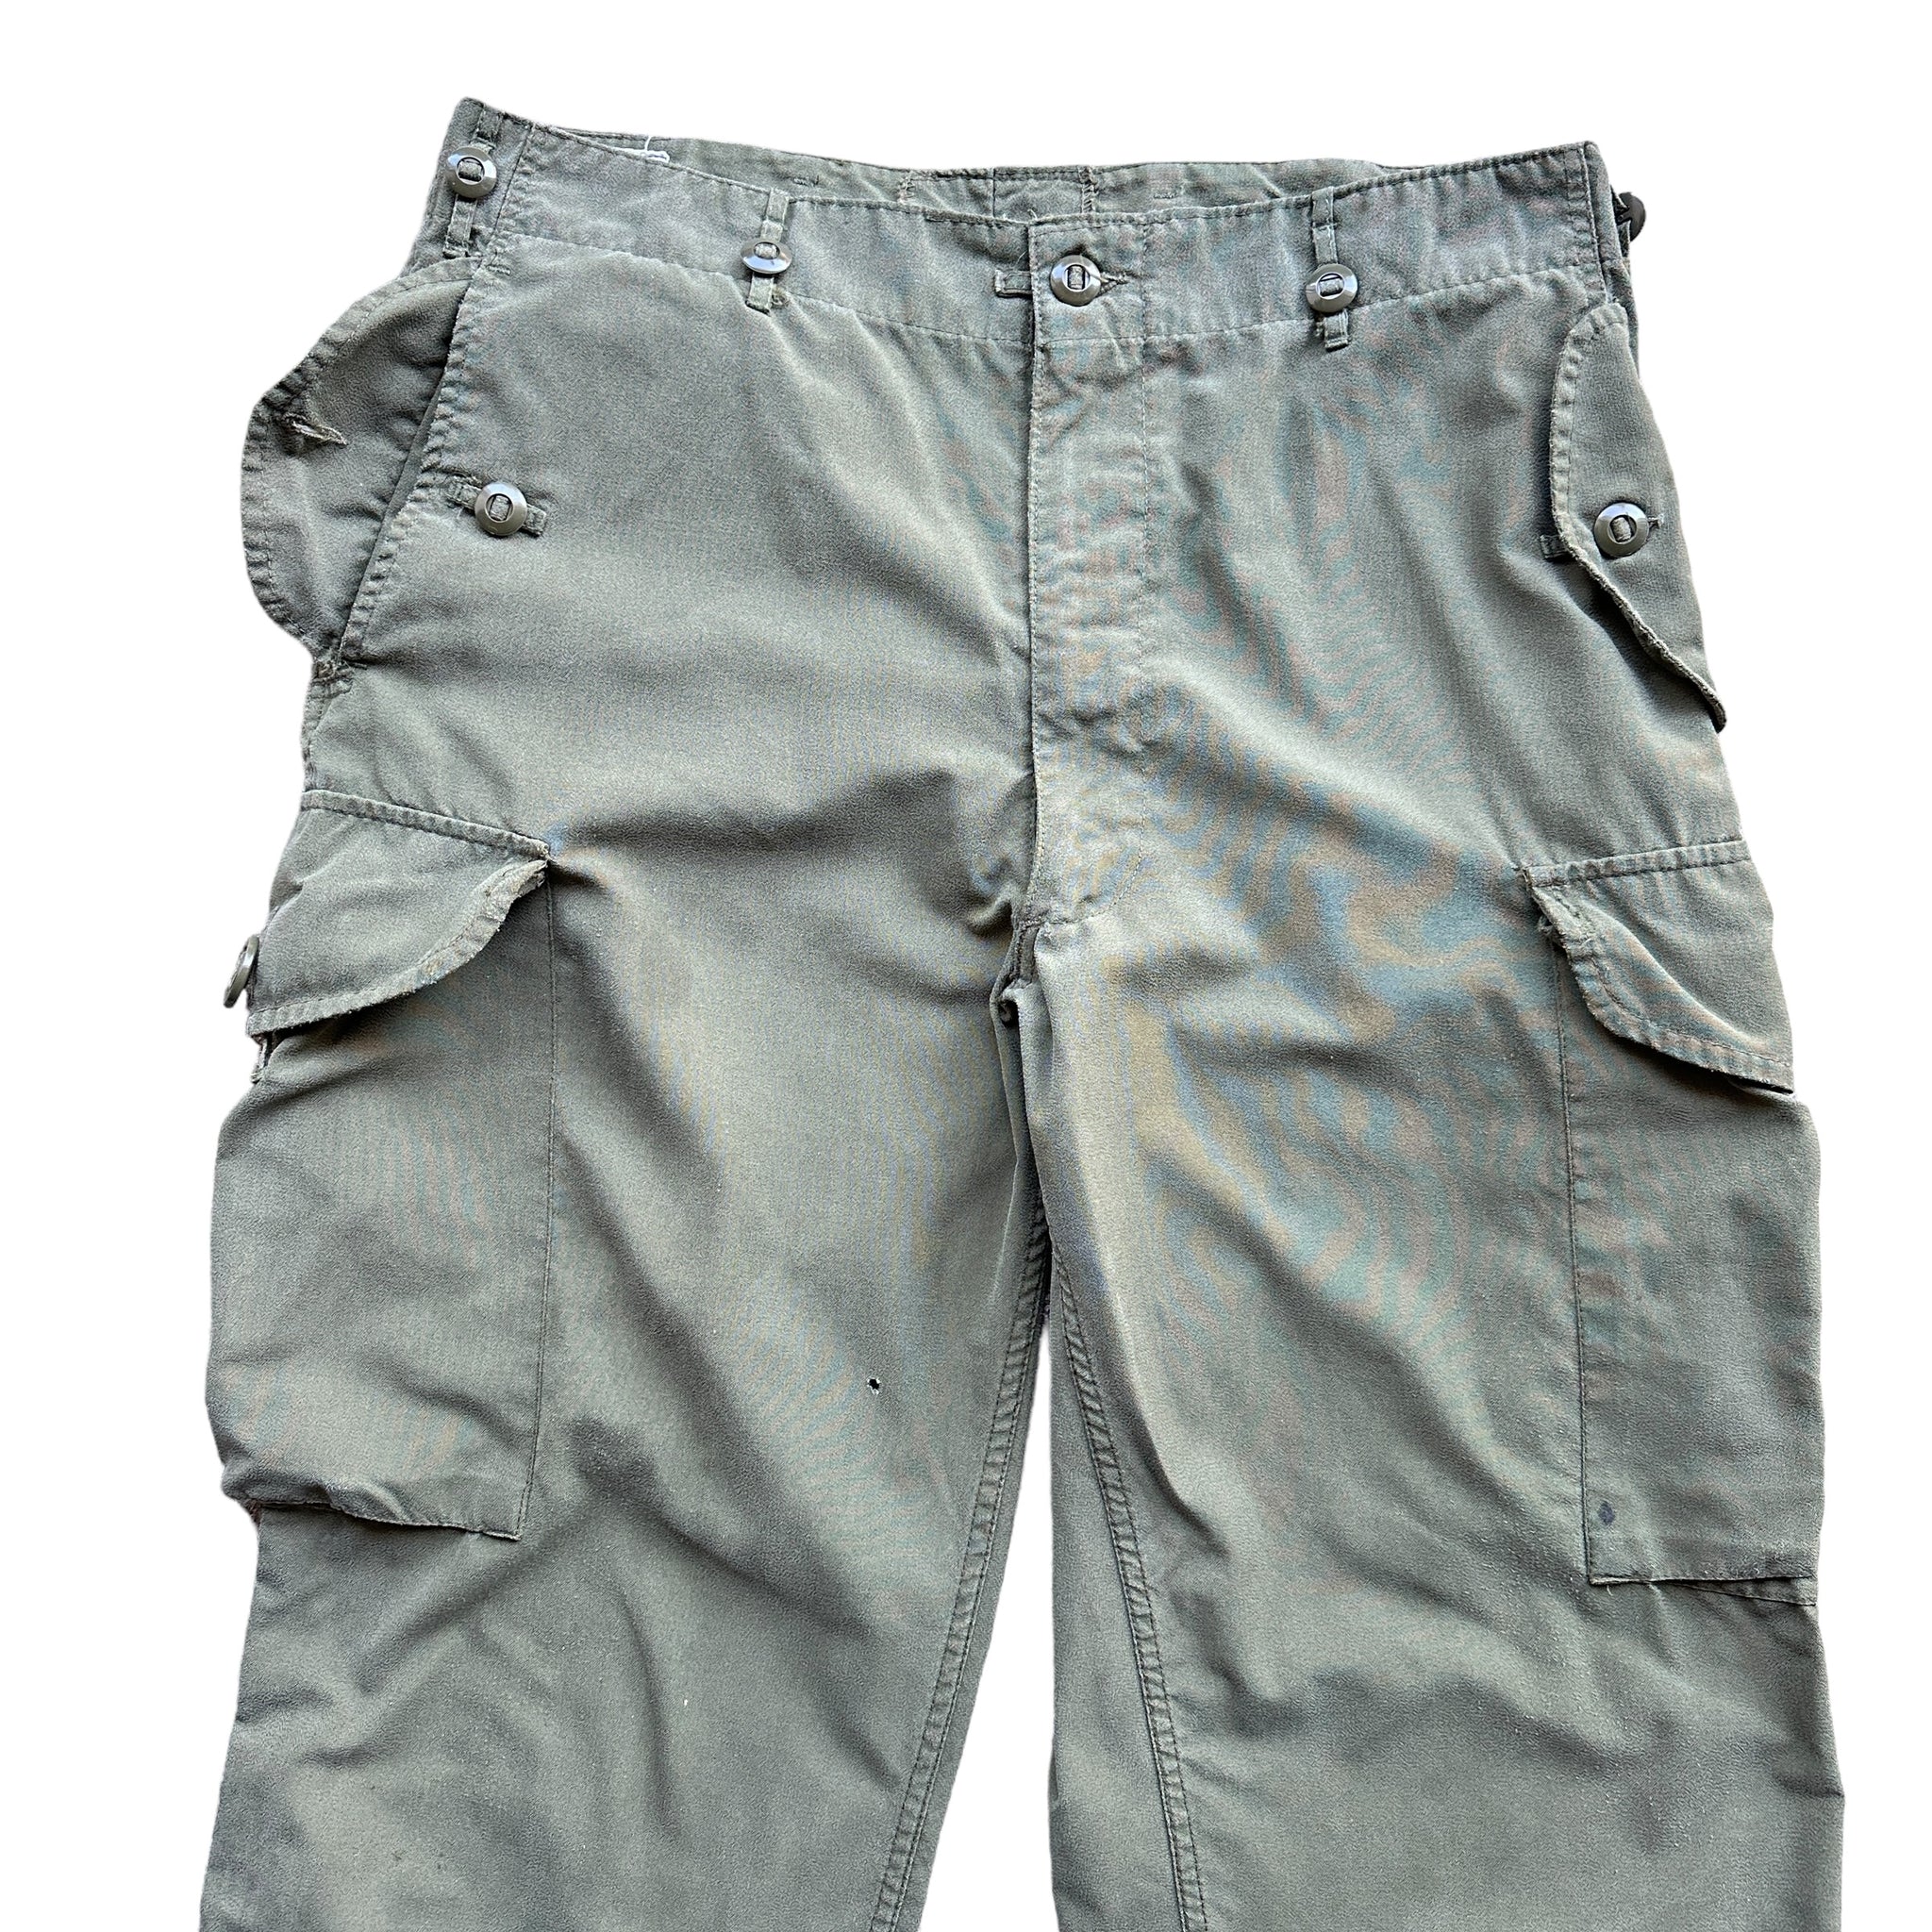 80s Combat trousers cargo pant 34/28